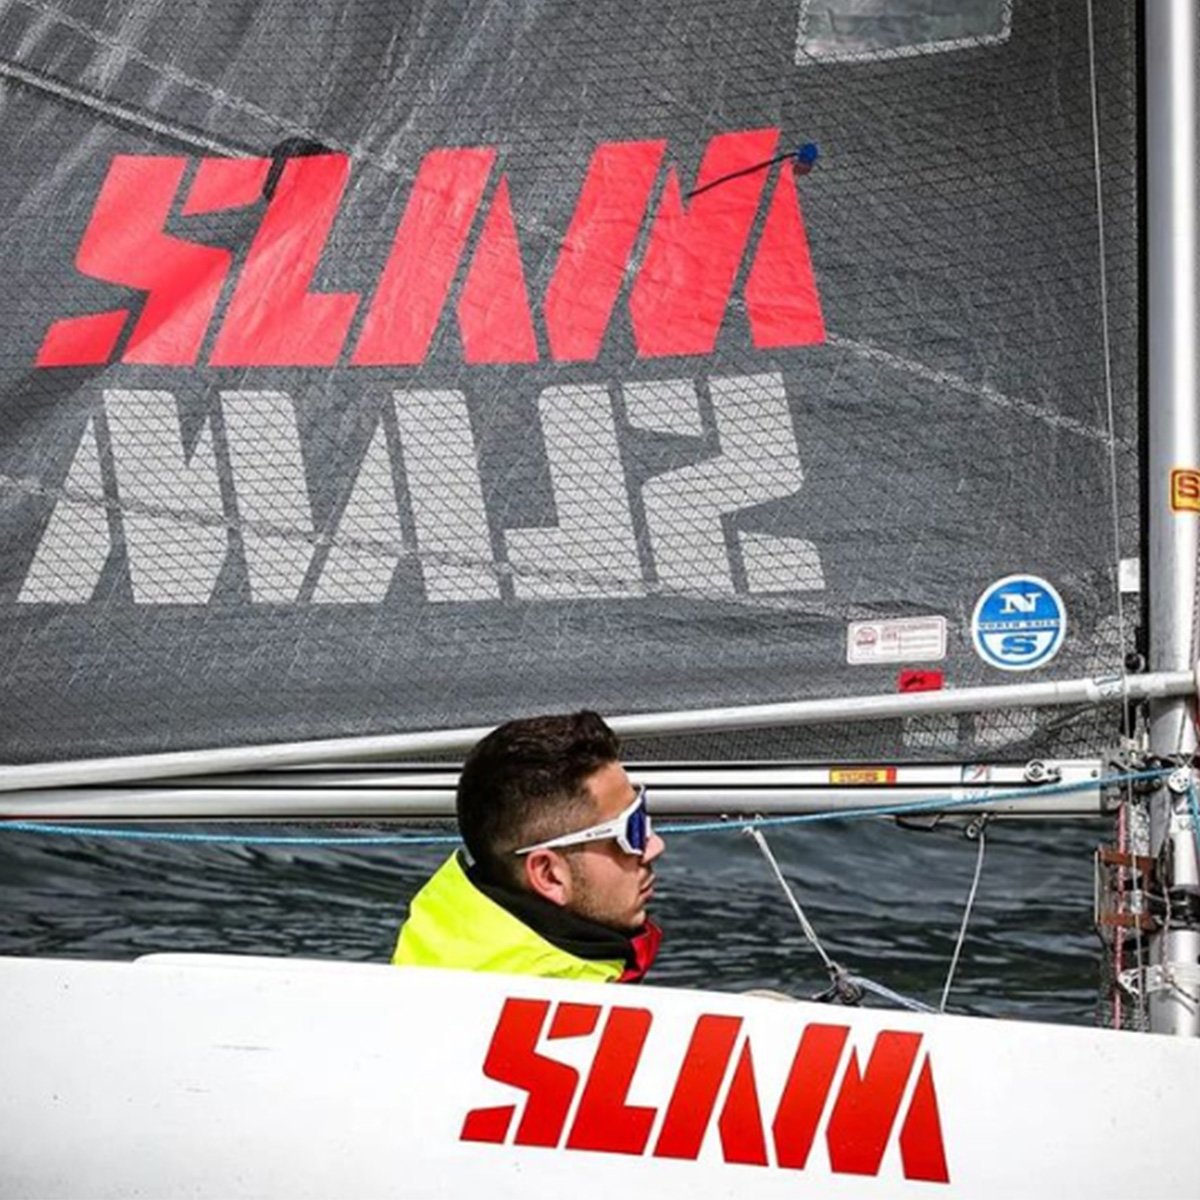 @slam_sailing